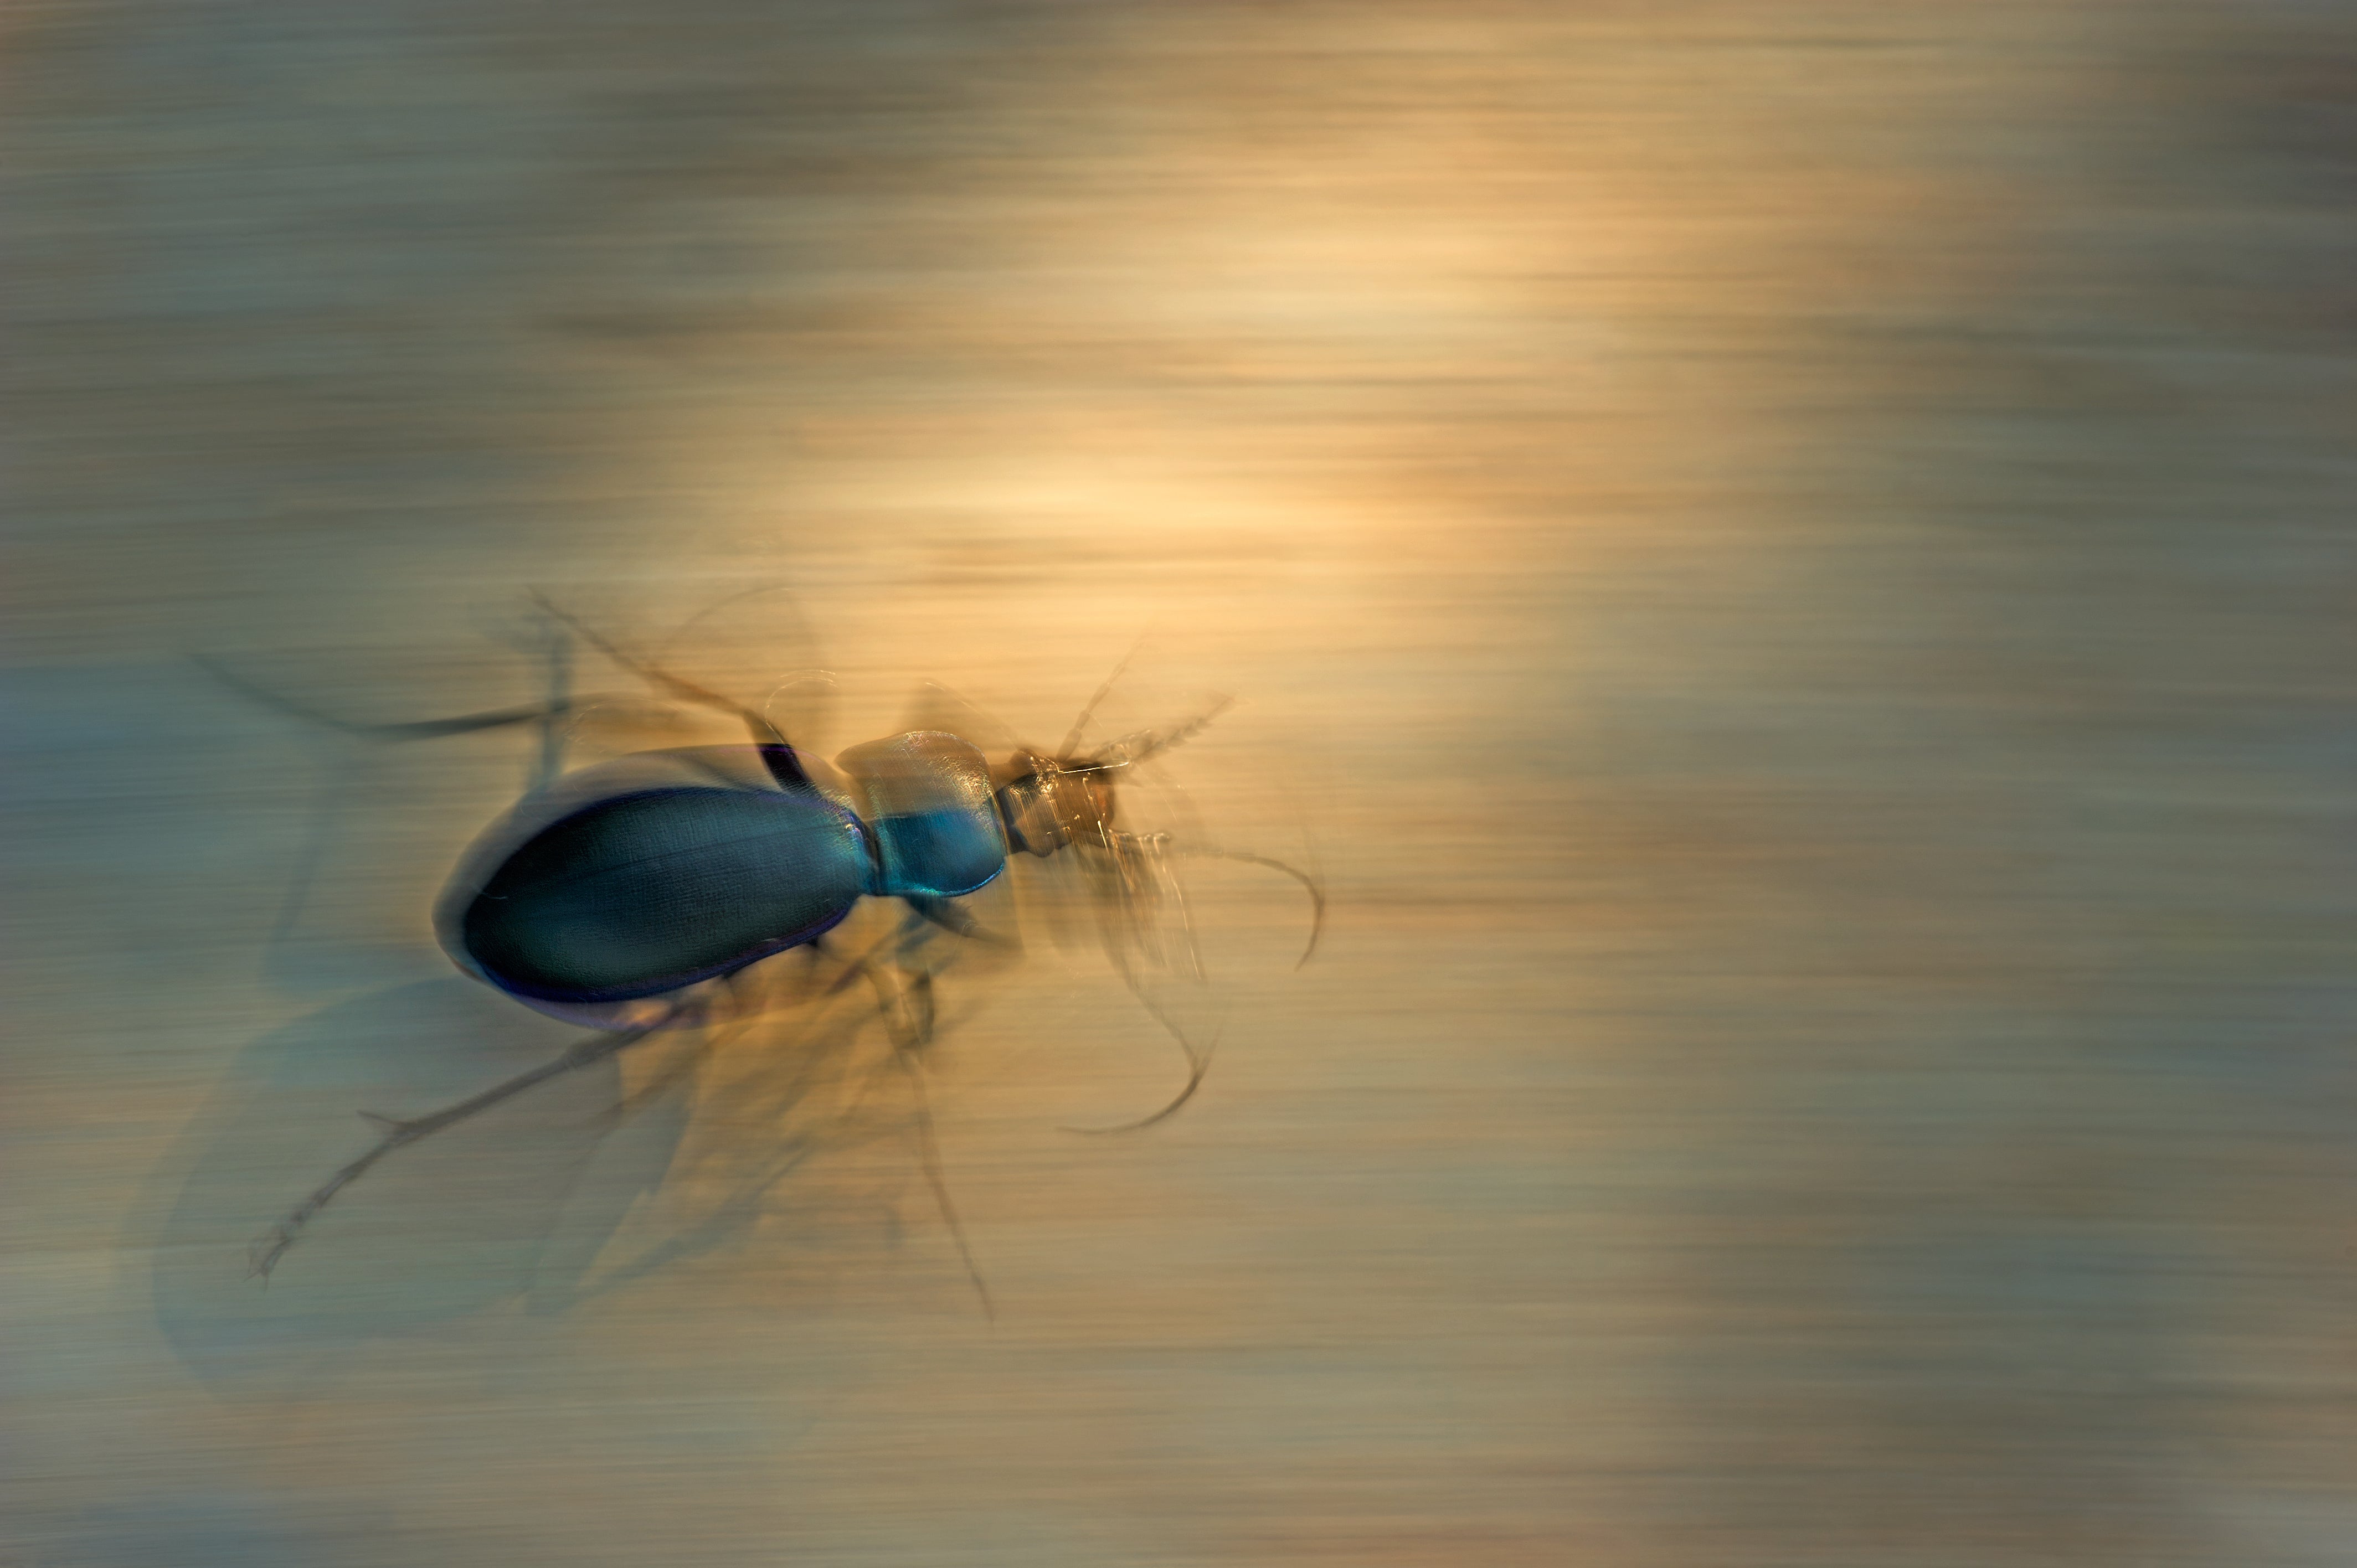 A ground beetle running on the ground. (Photo: Bernard Van Elegem)